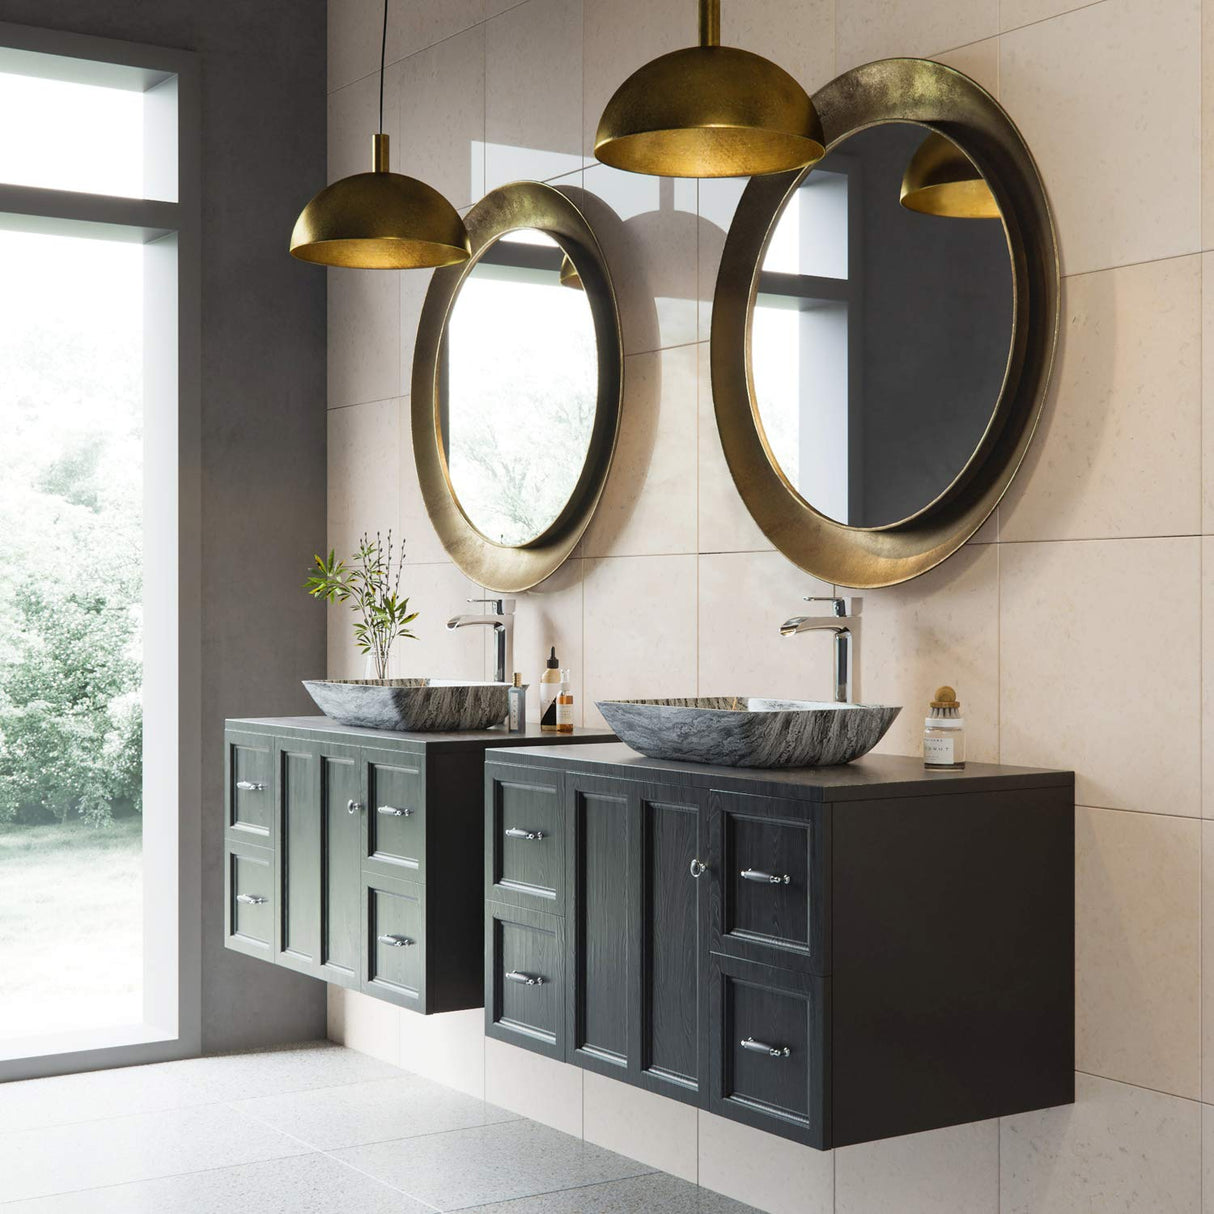 VIGO Titanium 18.125 inch L x 13 inch W Over the Counter Freestanding Glass Rectangular Vessel Bathroom Sink in Slate Grey - Sink for Bathroom VG07085